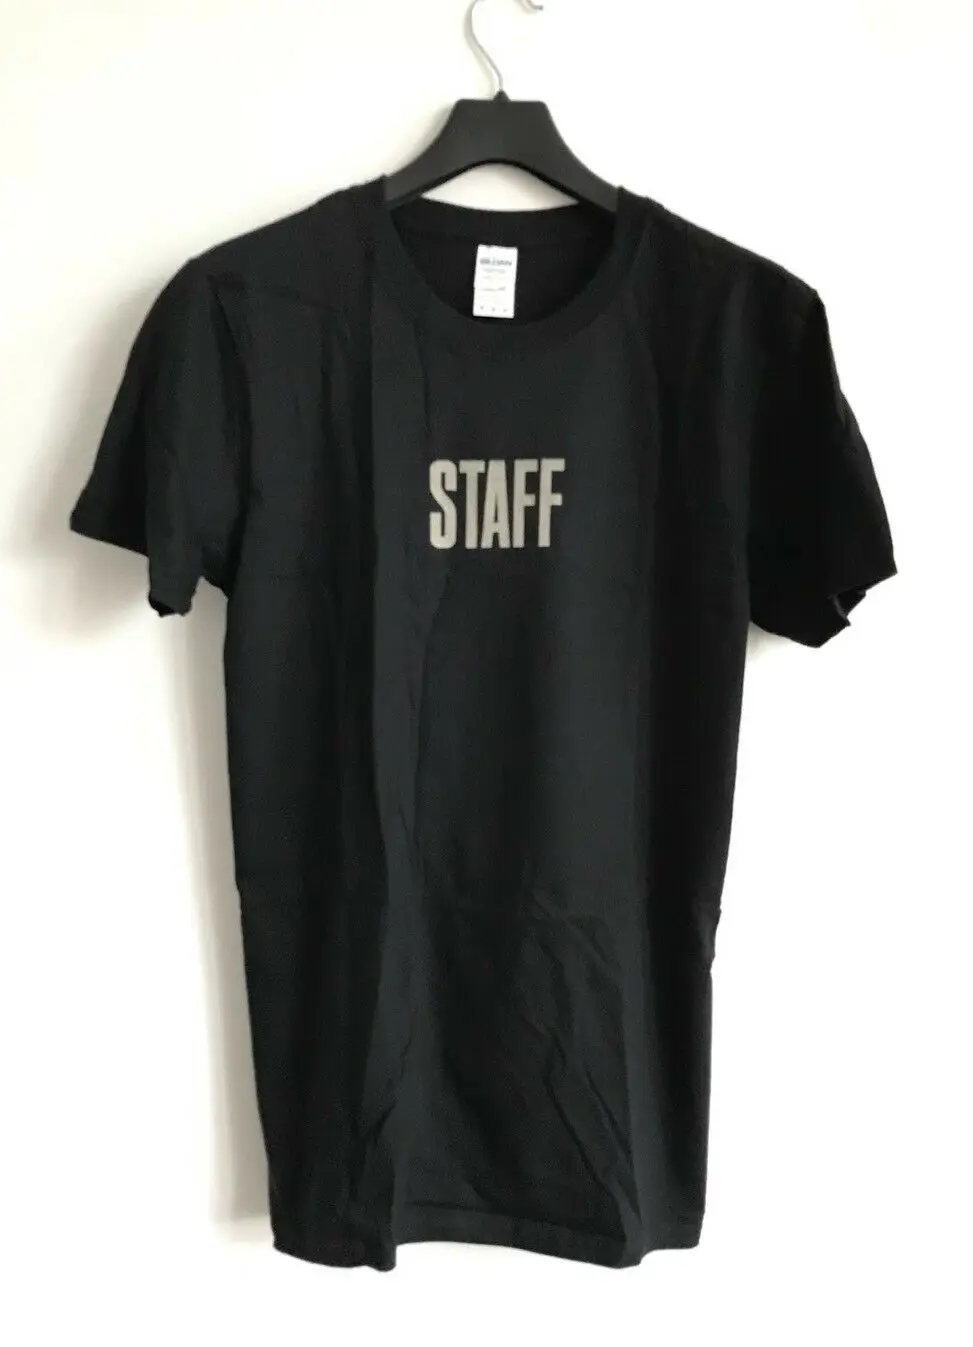 

JUSTIN BIEBER Purpose Tour STAFF By Jerry Lorenzo Cotton BLACK T-Shirt SIZE M Short Sleeve Hip Hop Tee T Shirt top tee